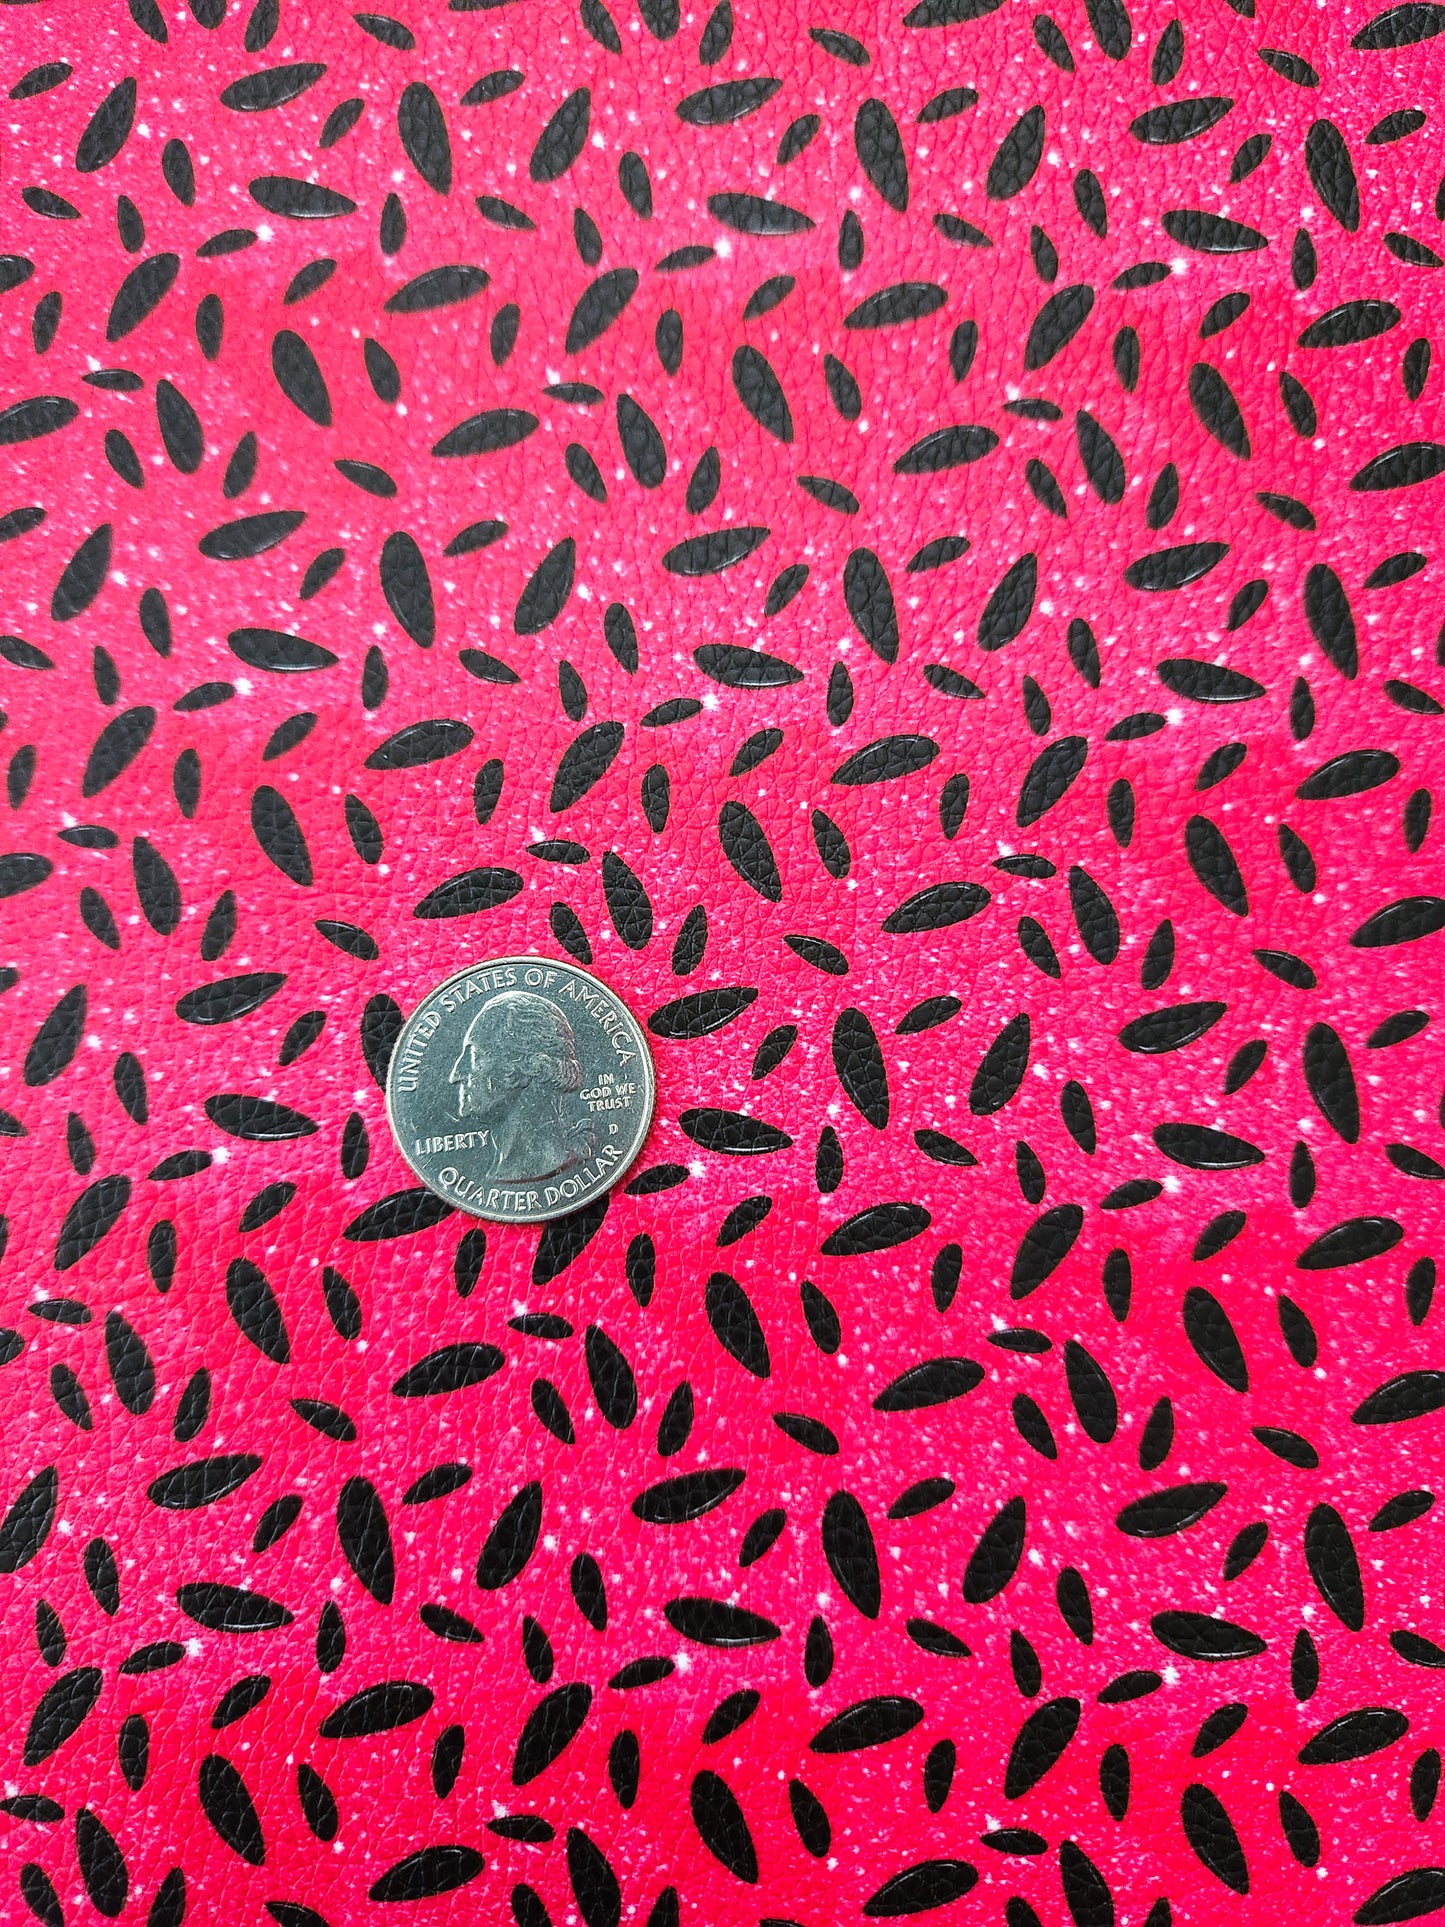 Glittery Watermelon Seeds 9x12 faux leather sheet